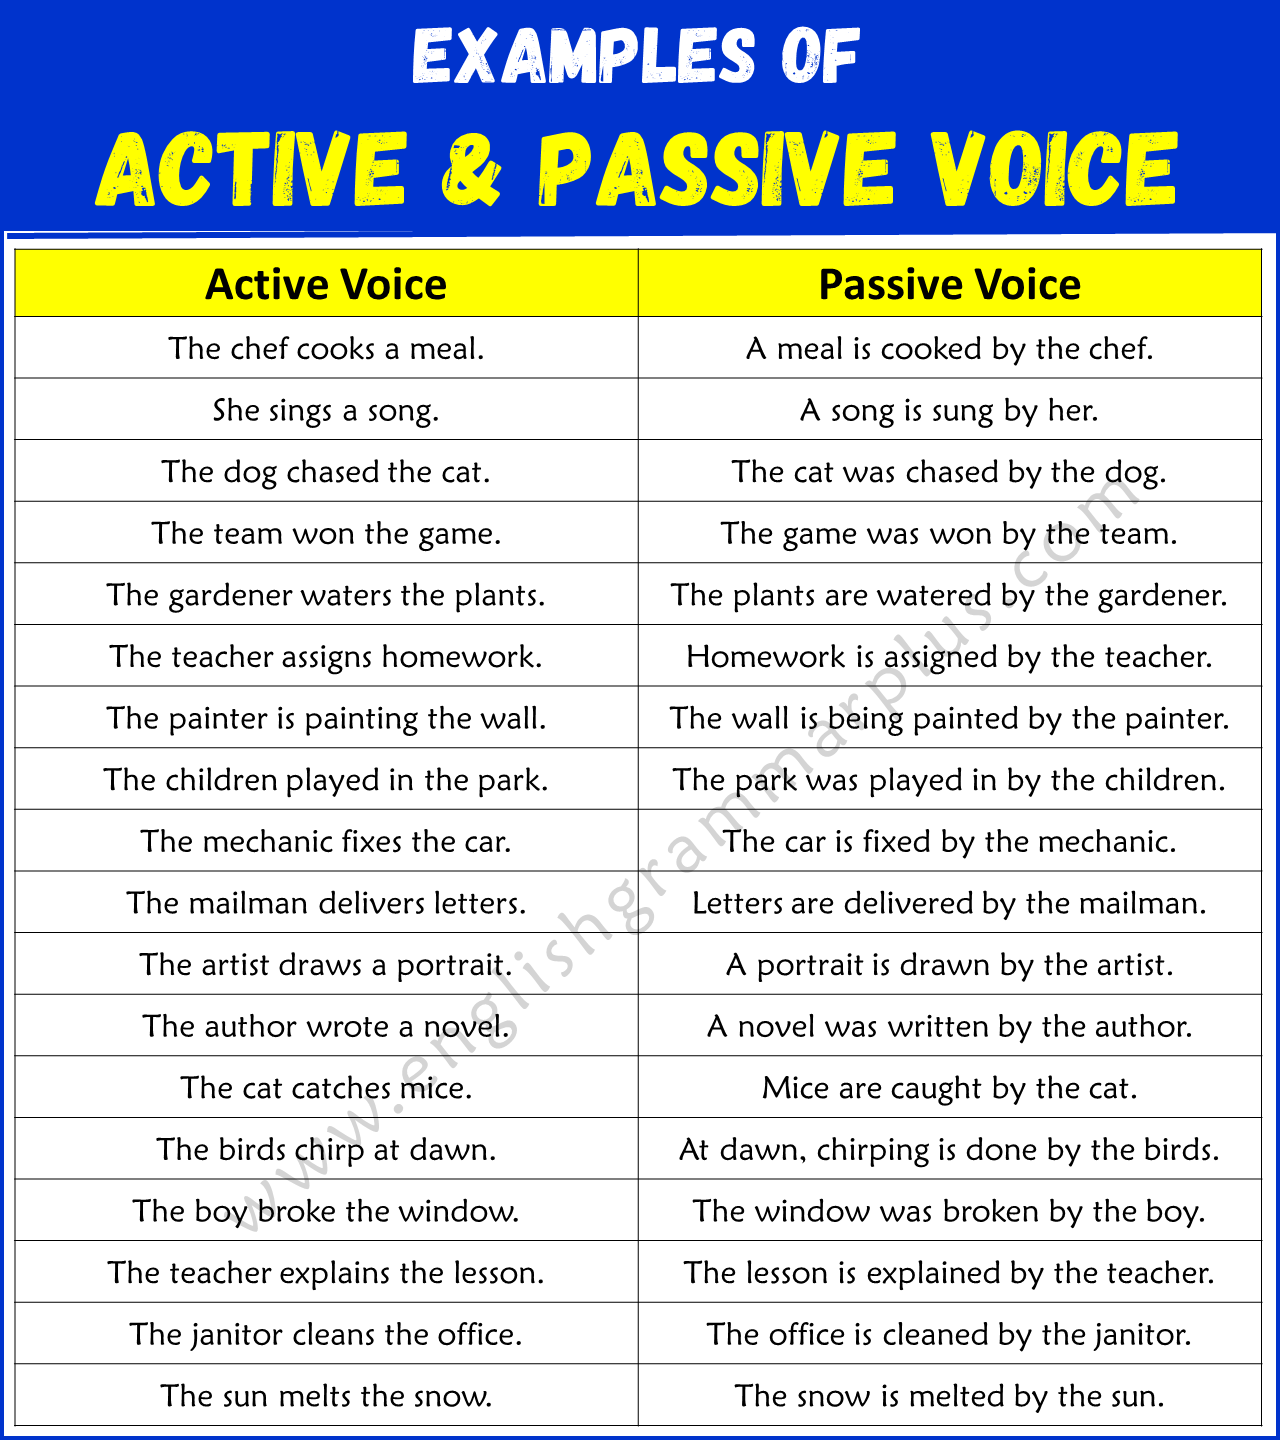 Active & Passive Voice examples